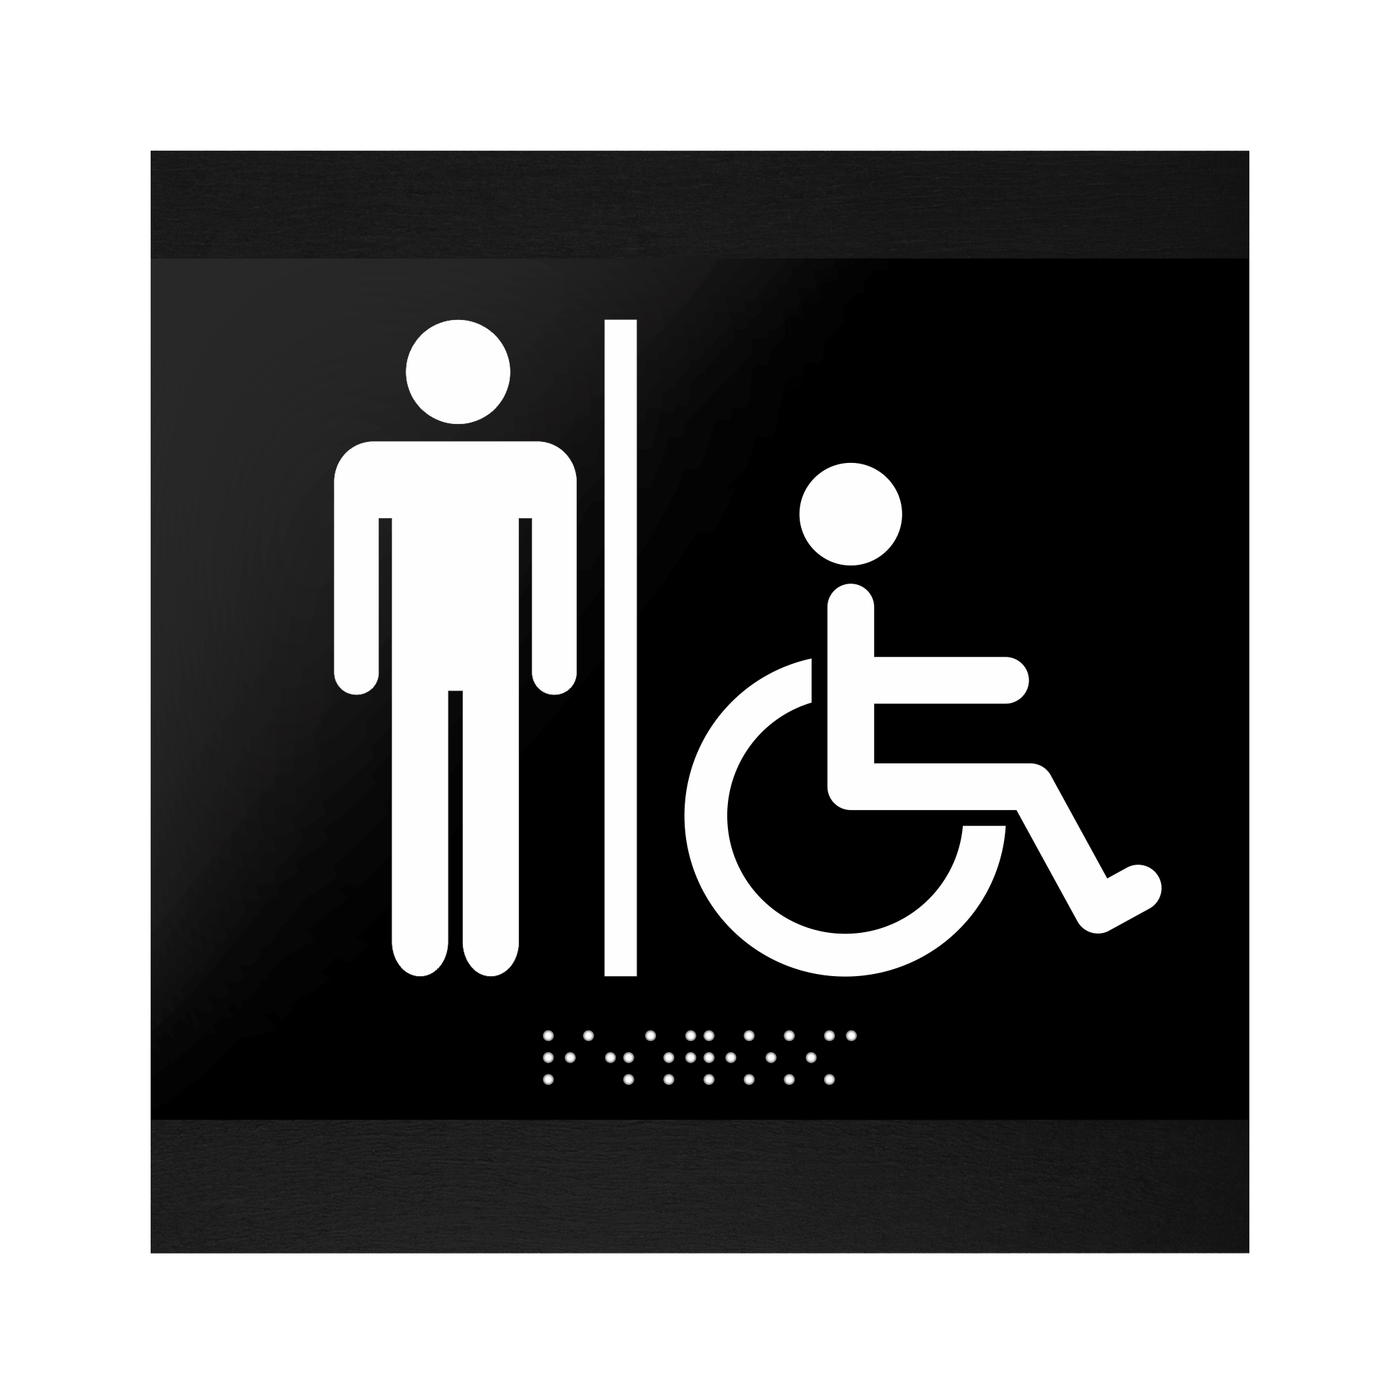 Restroom Sign for Men & Wheelchair "Buro" Design